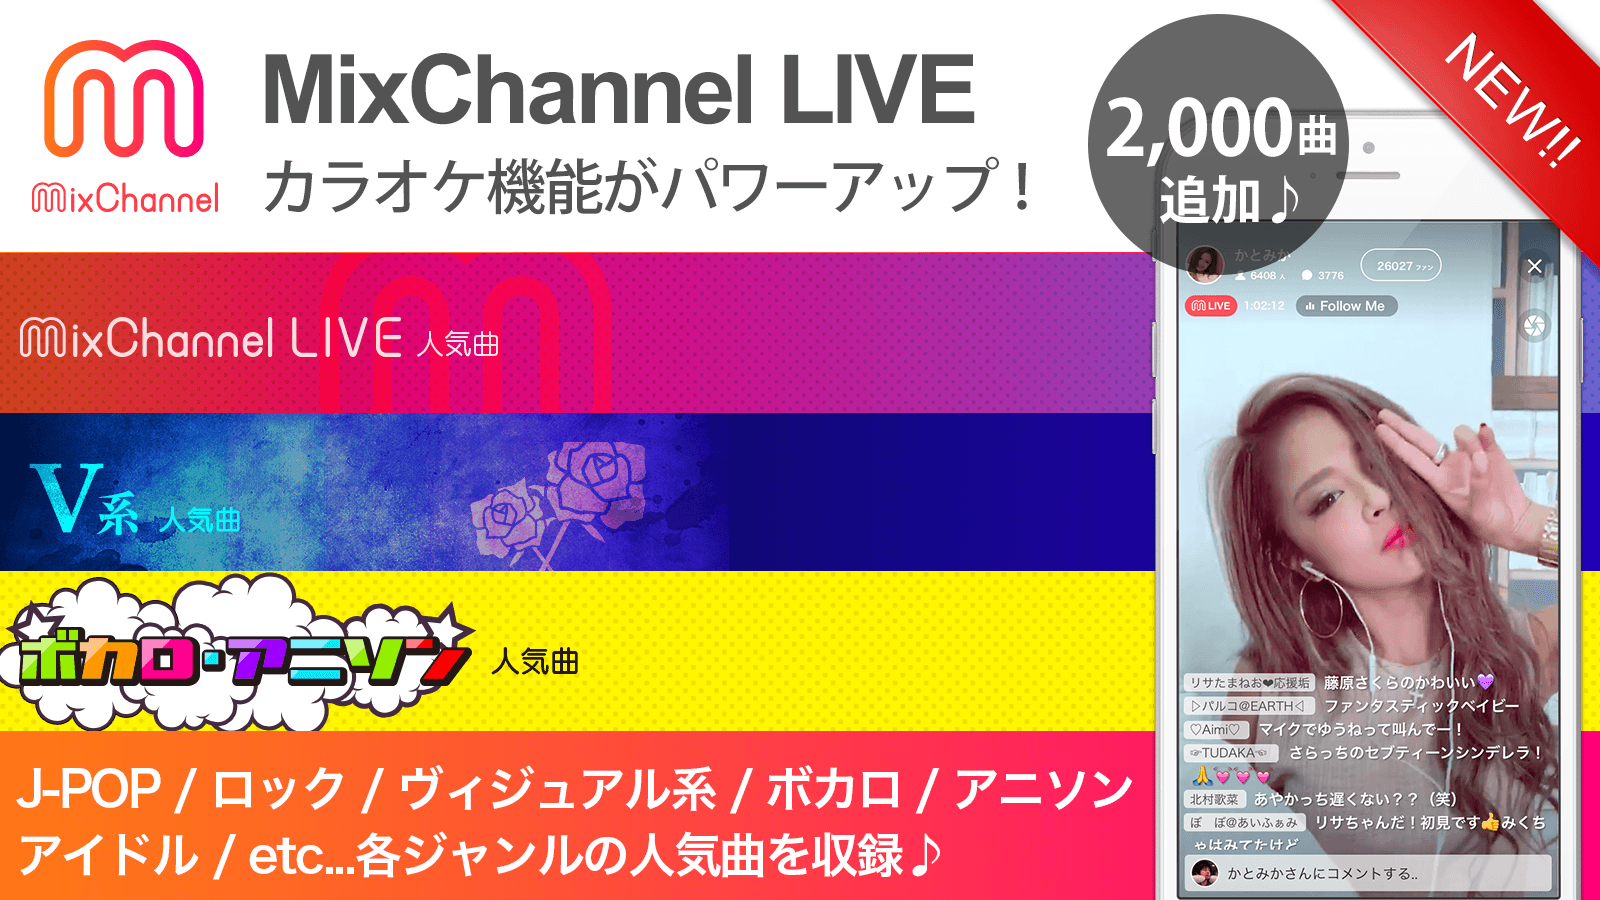 MixChannel Live